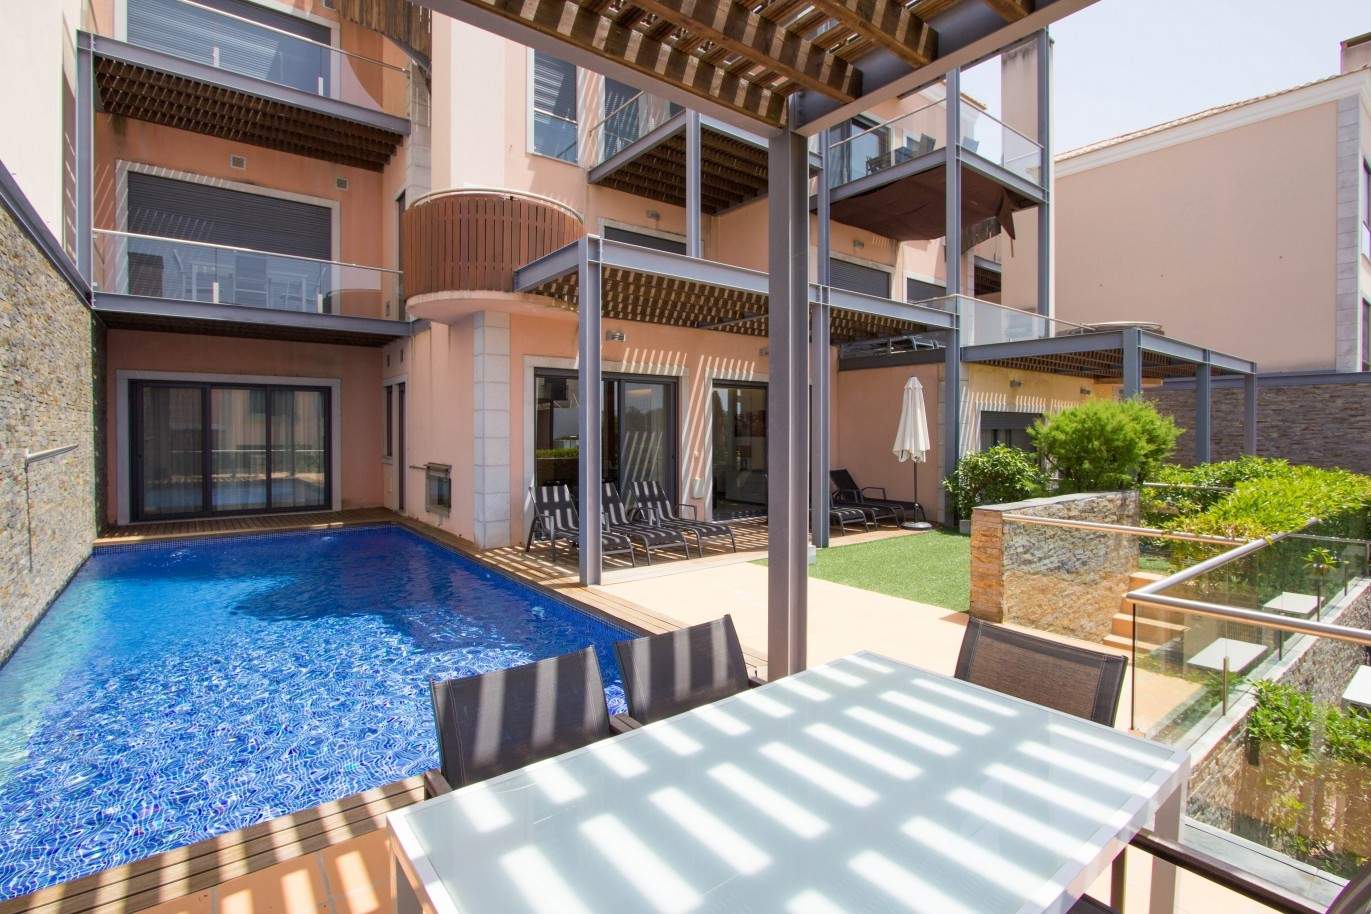 Venta de apartamento con piscina, Vale do Lobo, Algarve, Portugal_65443